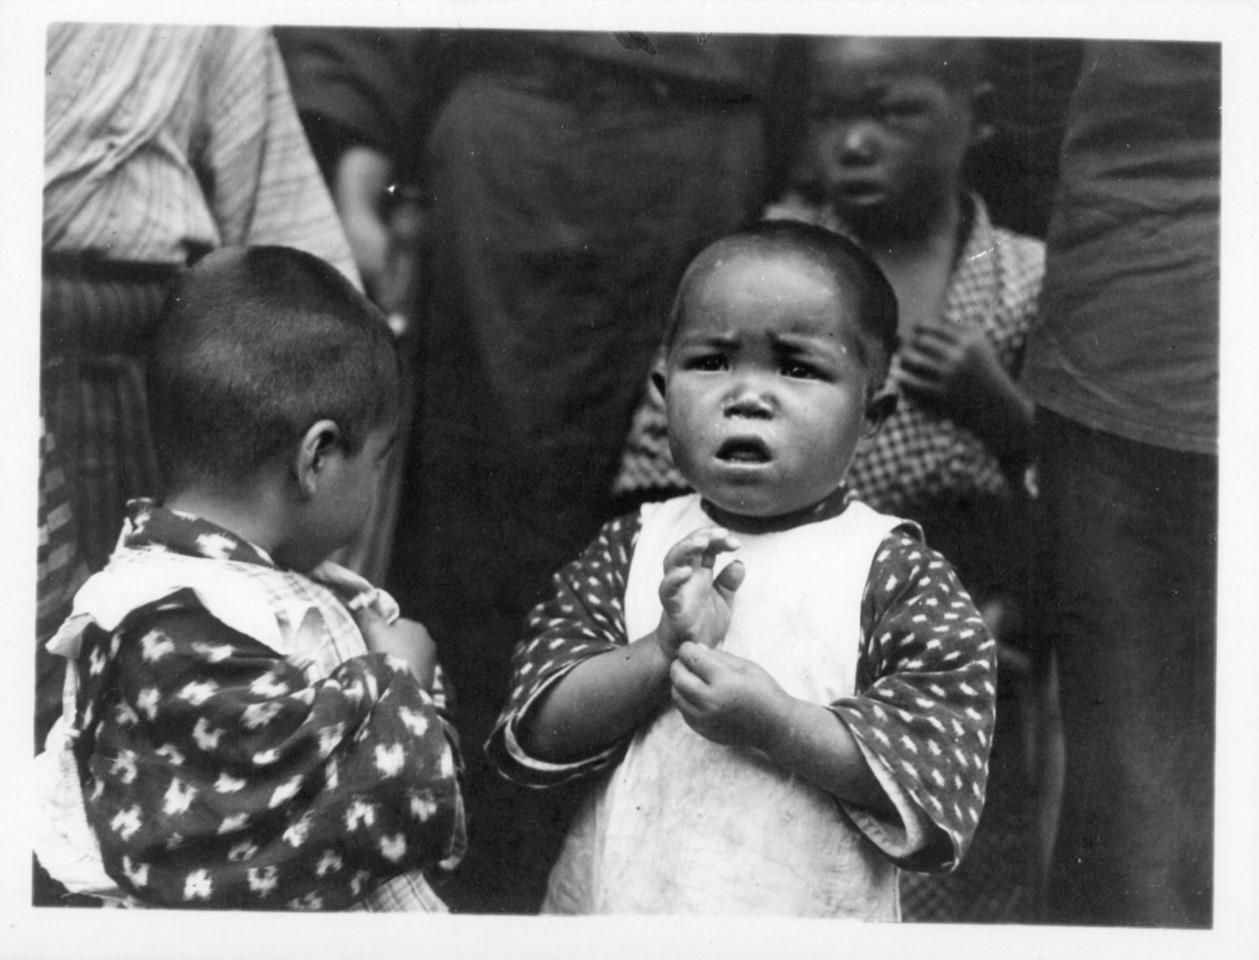 Kindergarten survivors of Hiroshima in 1946, Japan. PHOTO: RICHARD BAKER/WORLD OUTLOOK, GENERAL COMMISSION ON ARCHIVES AND HISTORY